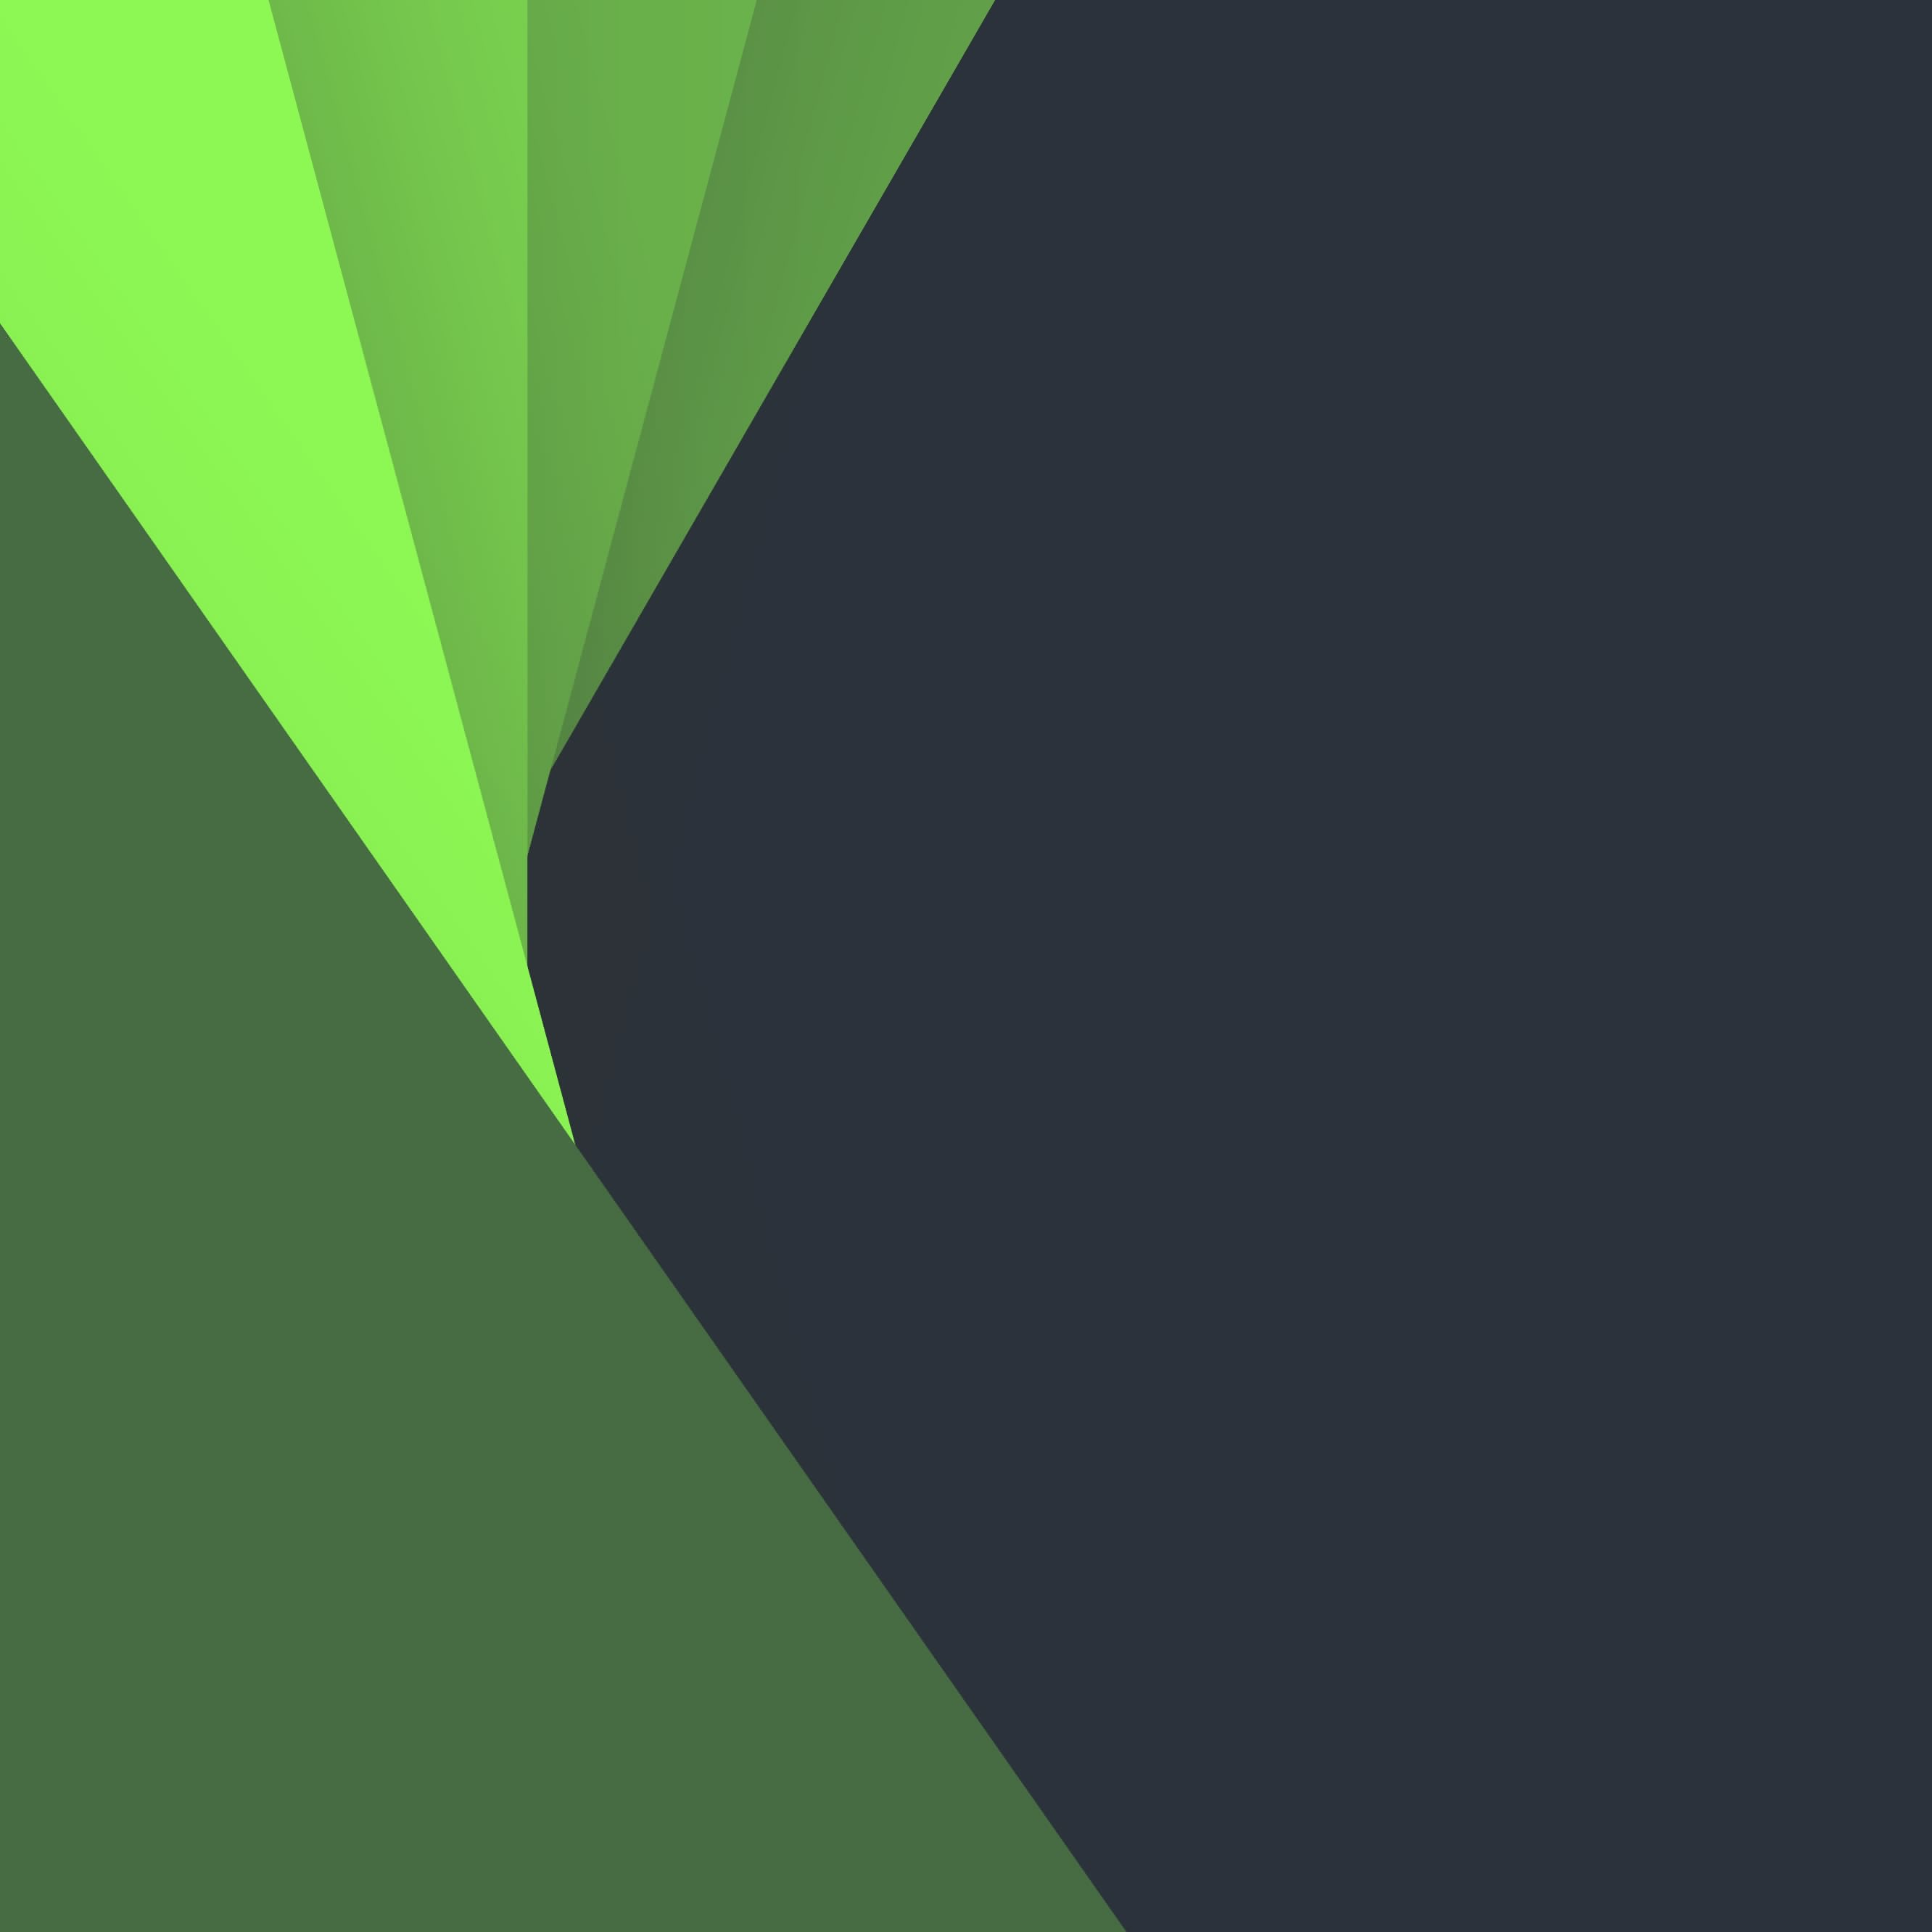 Wallpaper Android Lollipop Green Material Design Circles